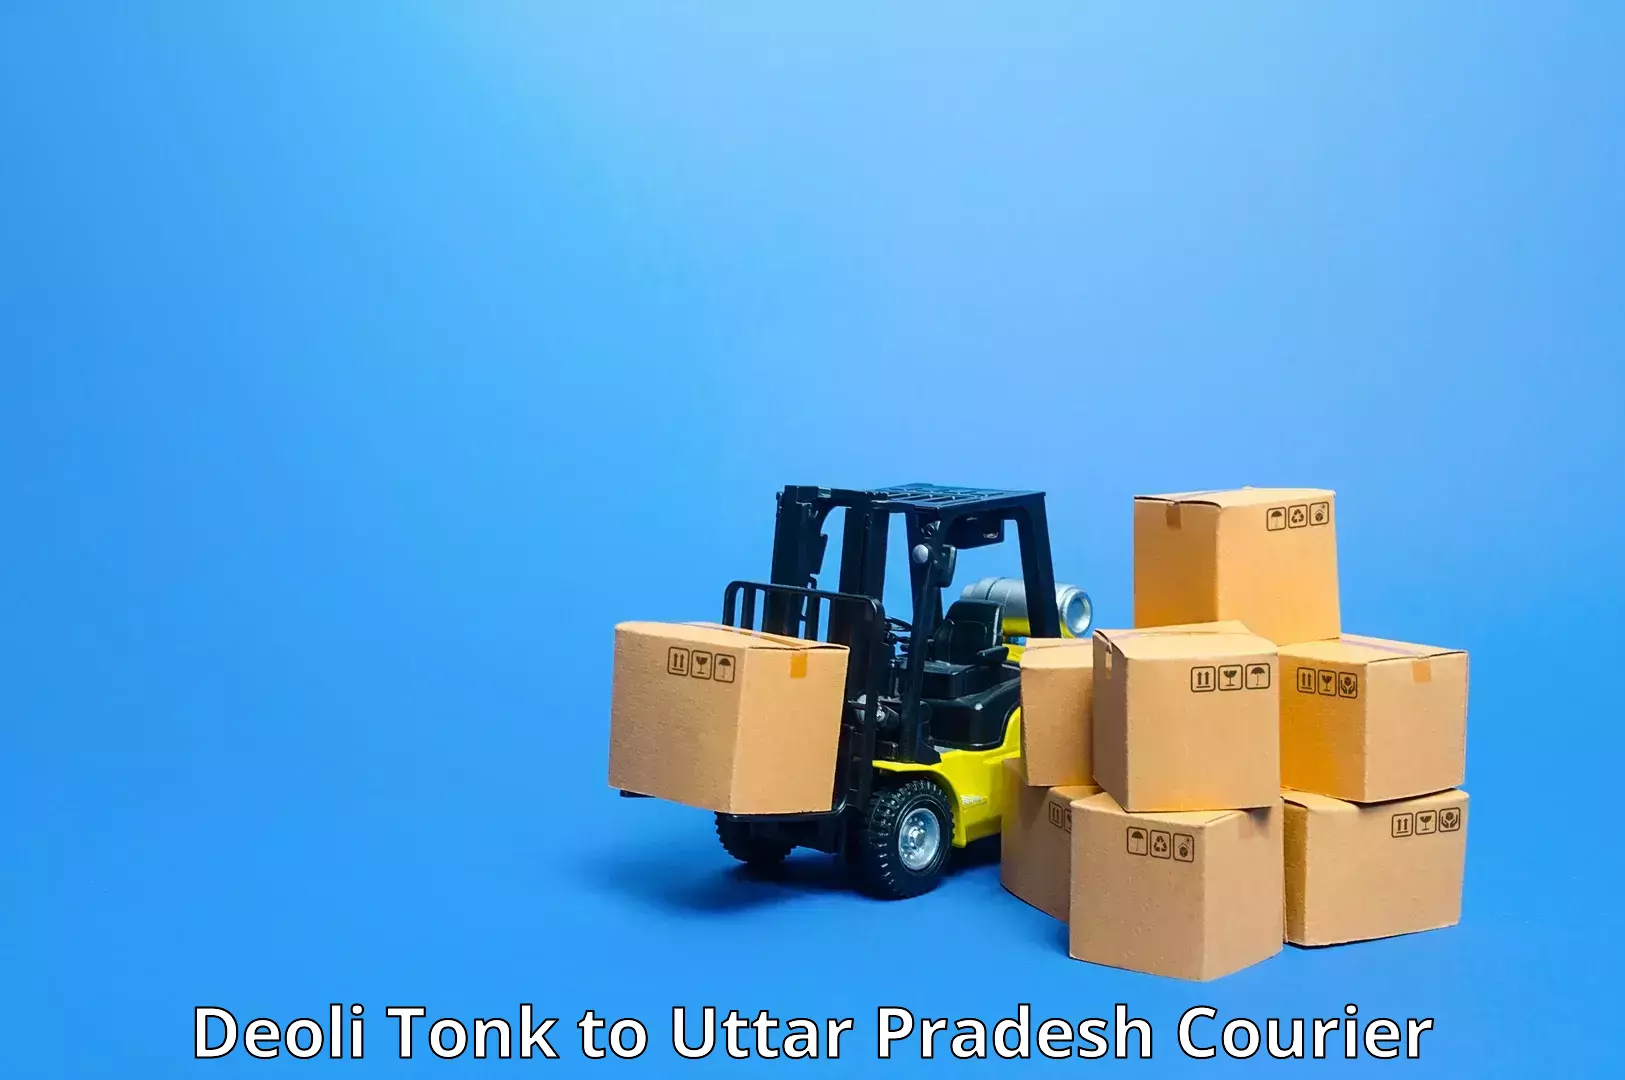 Bulk courier orders Deoli Tonk to Chitrakoot